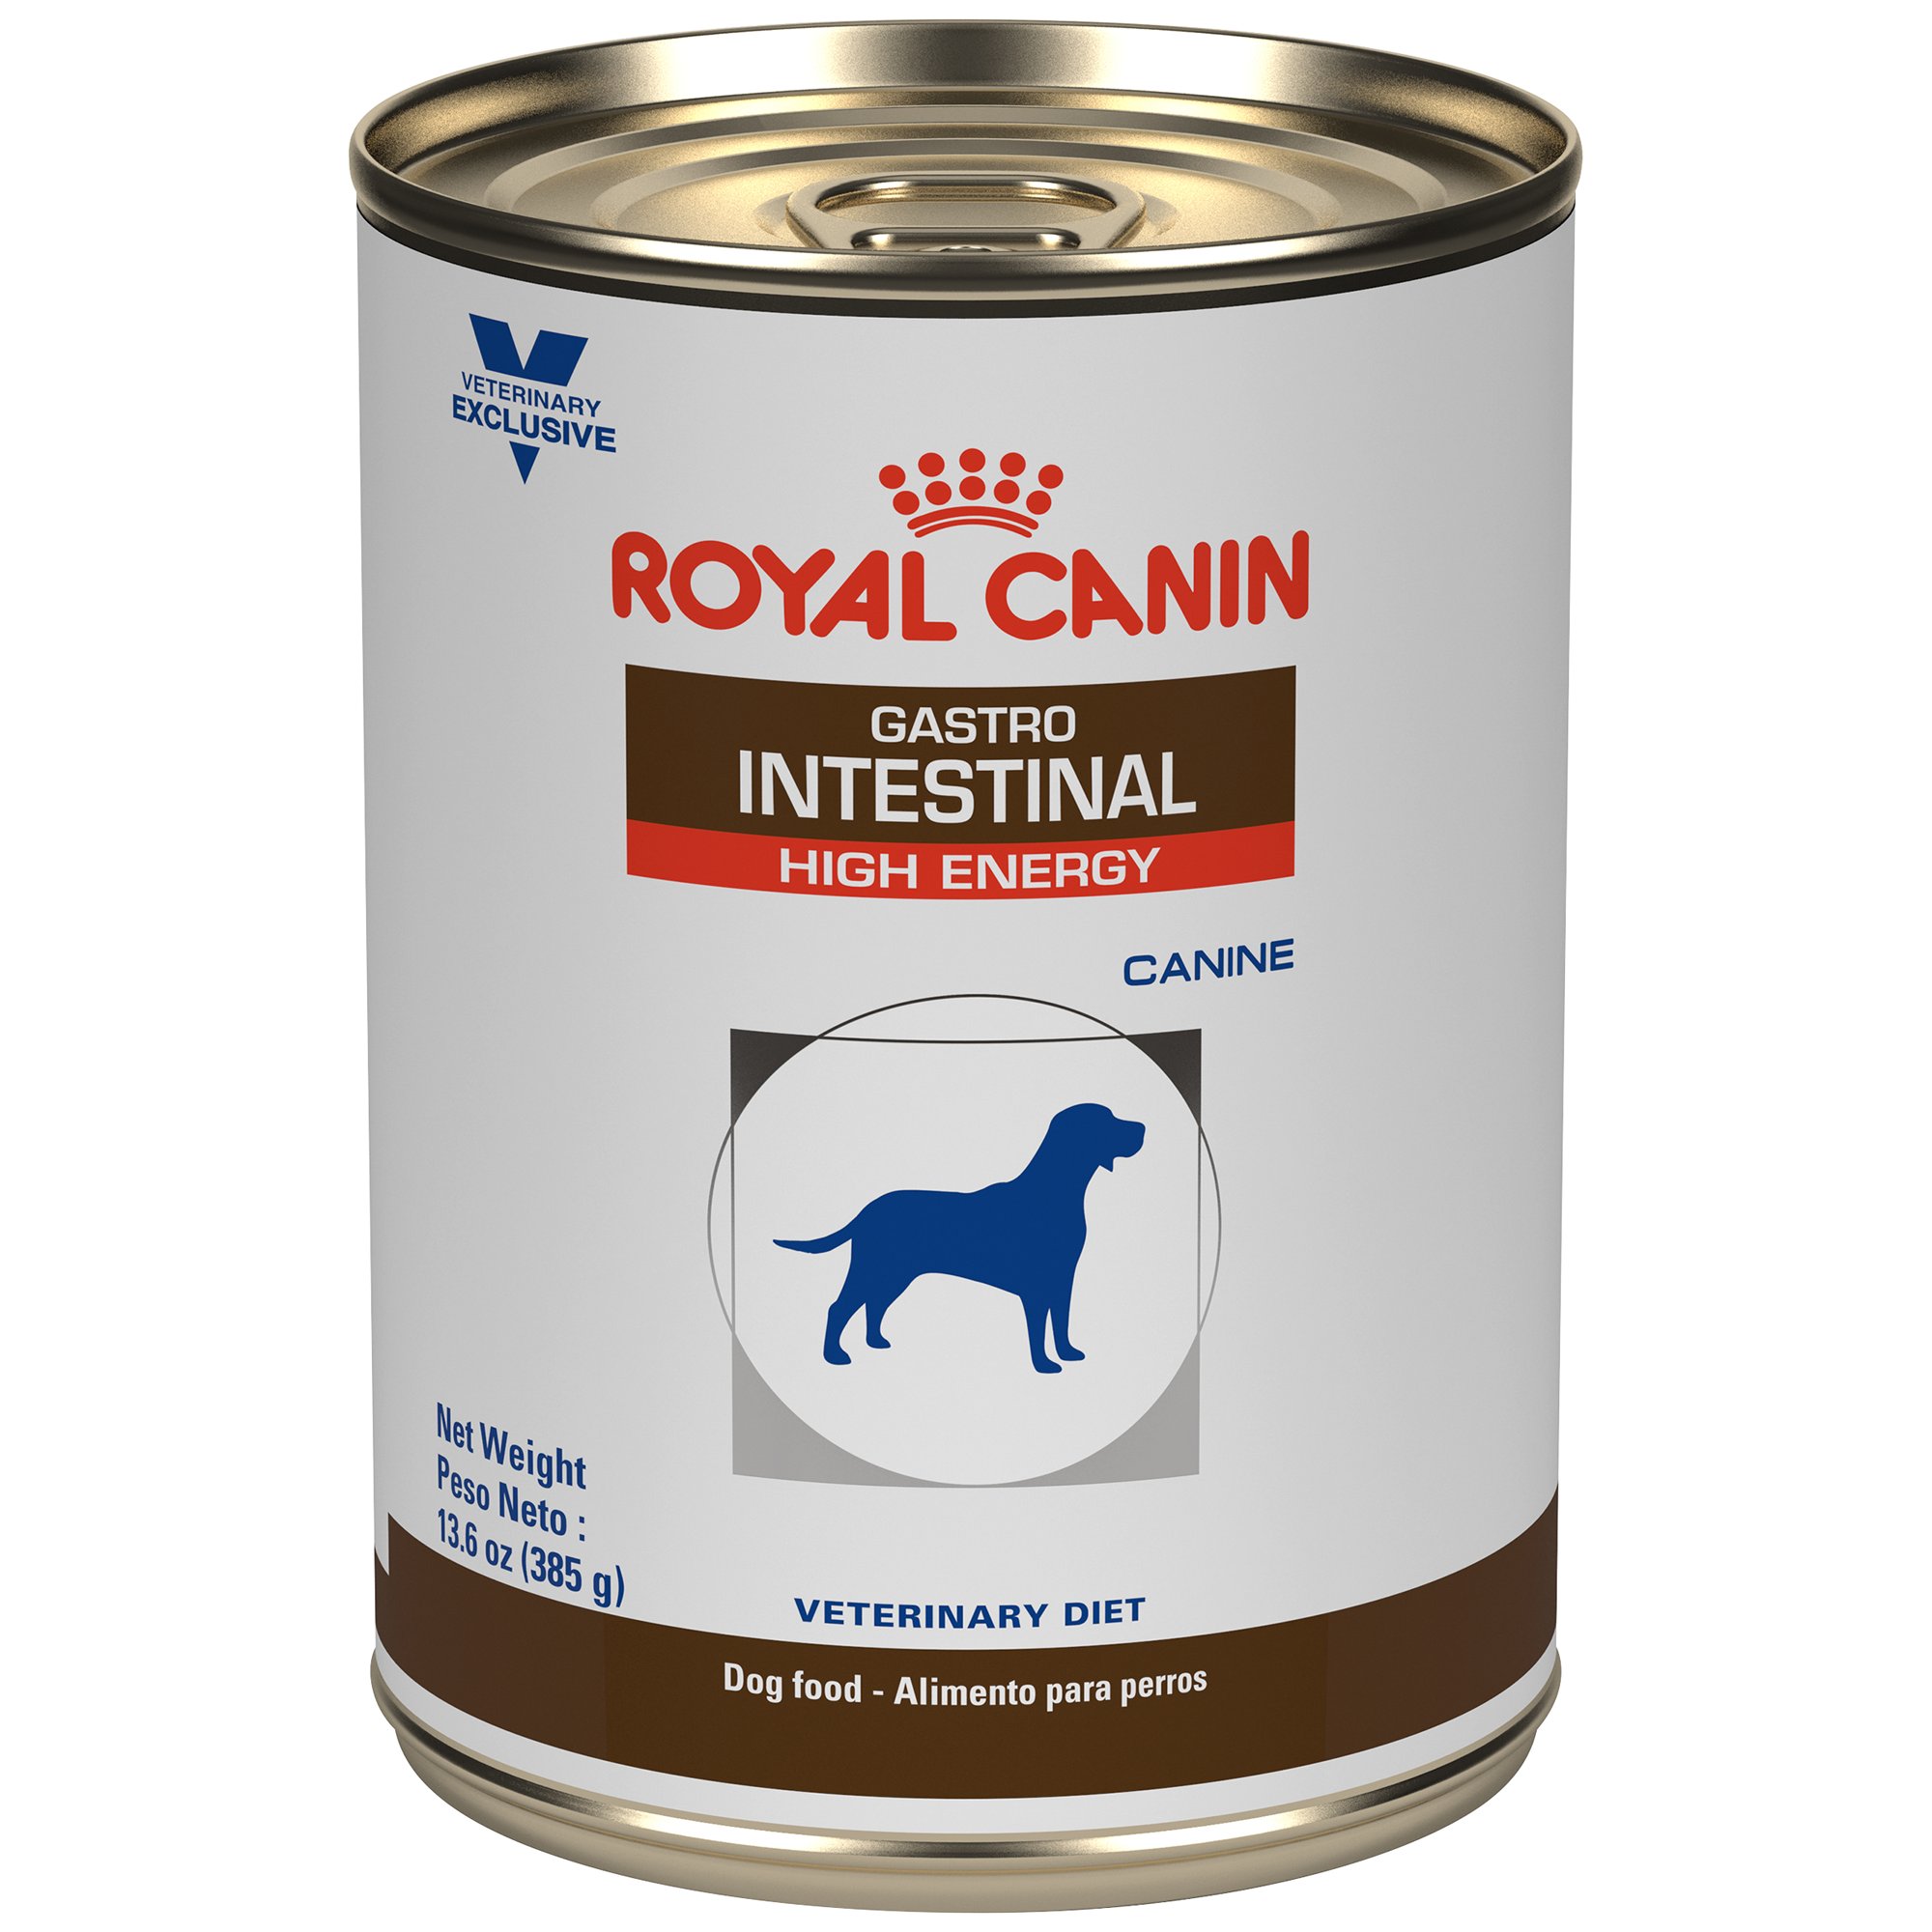 Royal Canin Hepatic Wet Cat Food